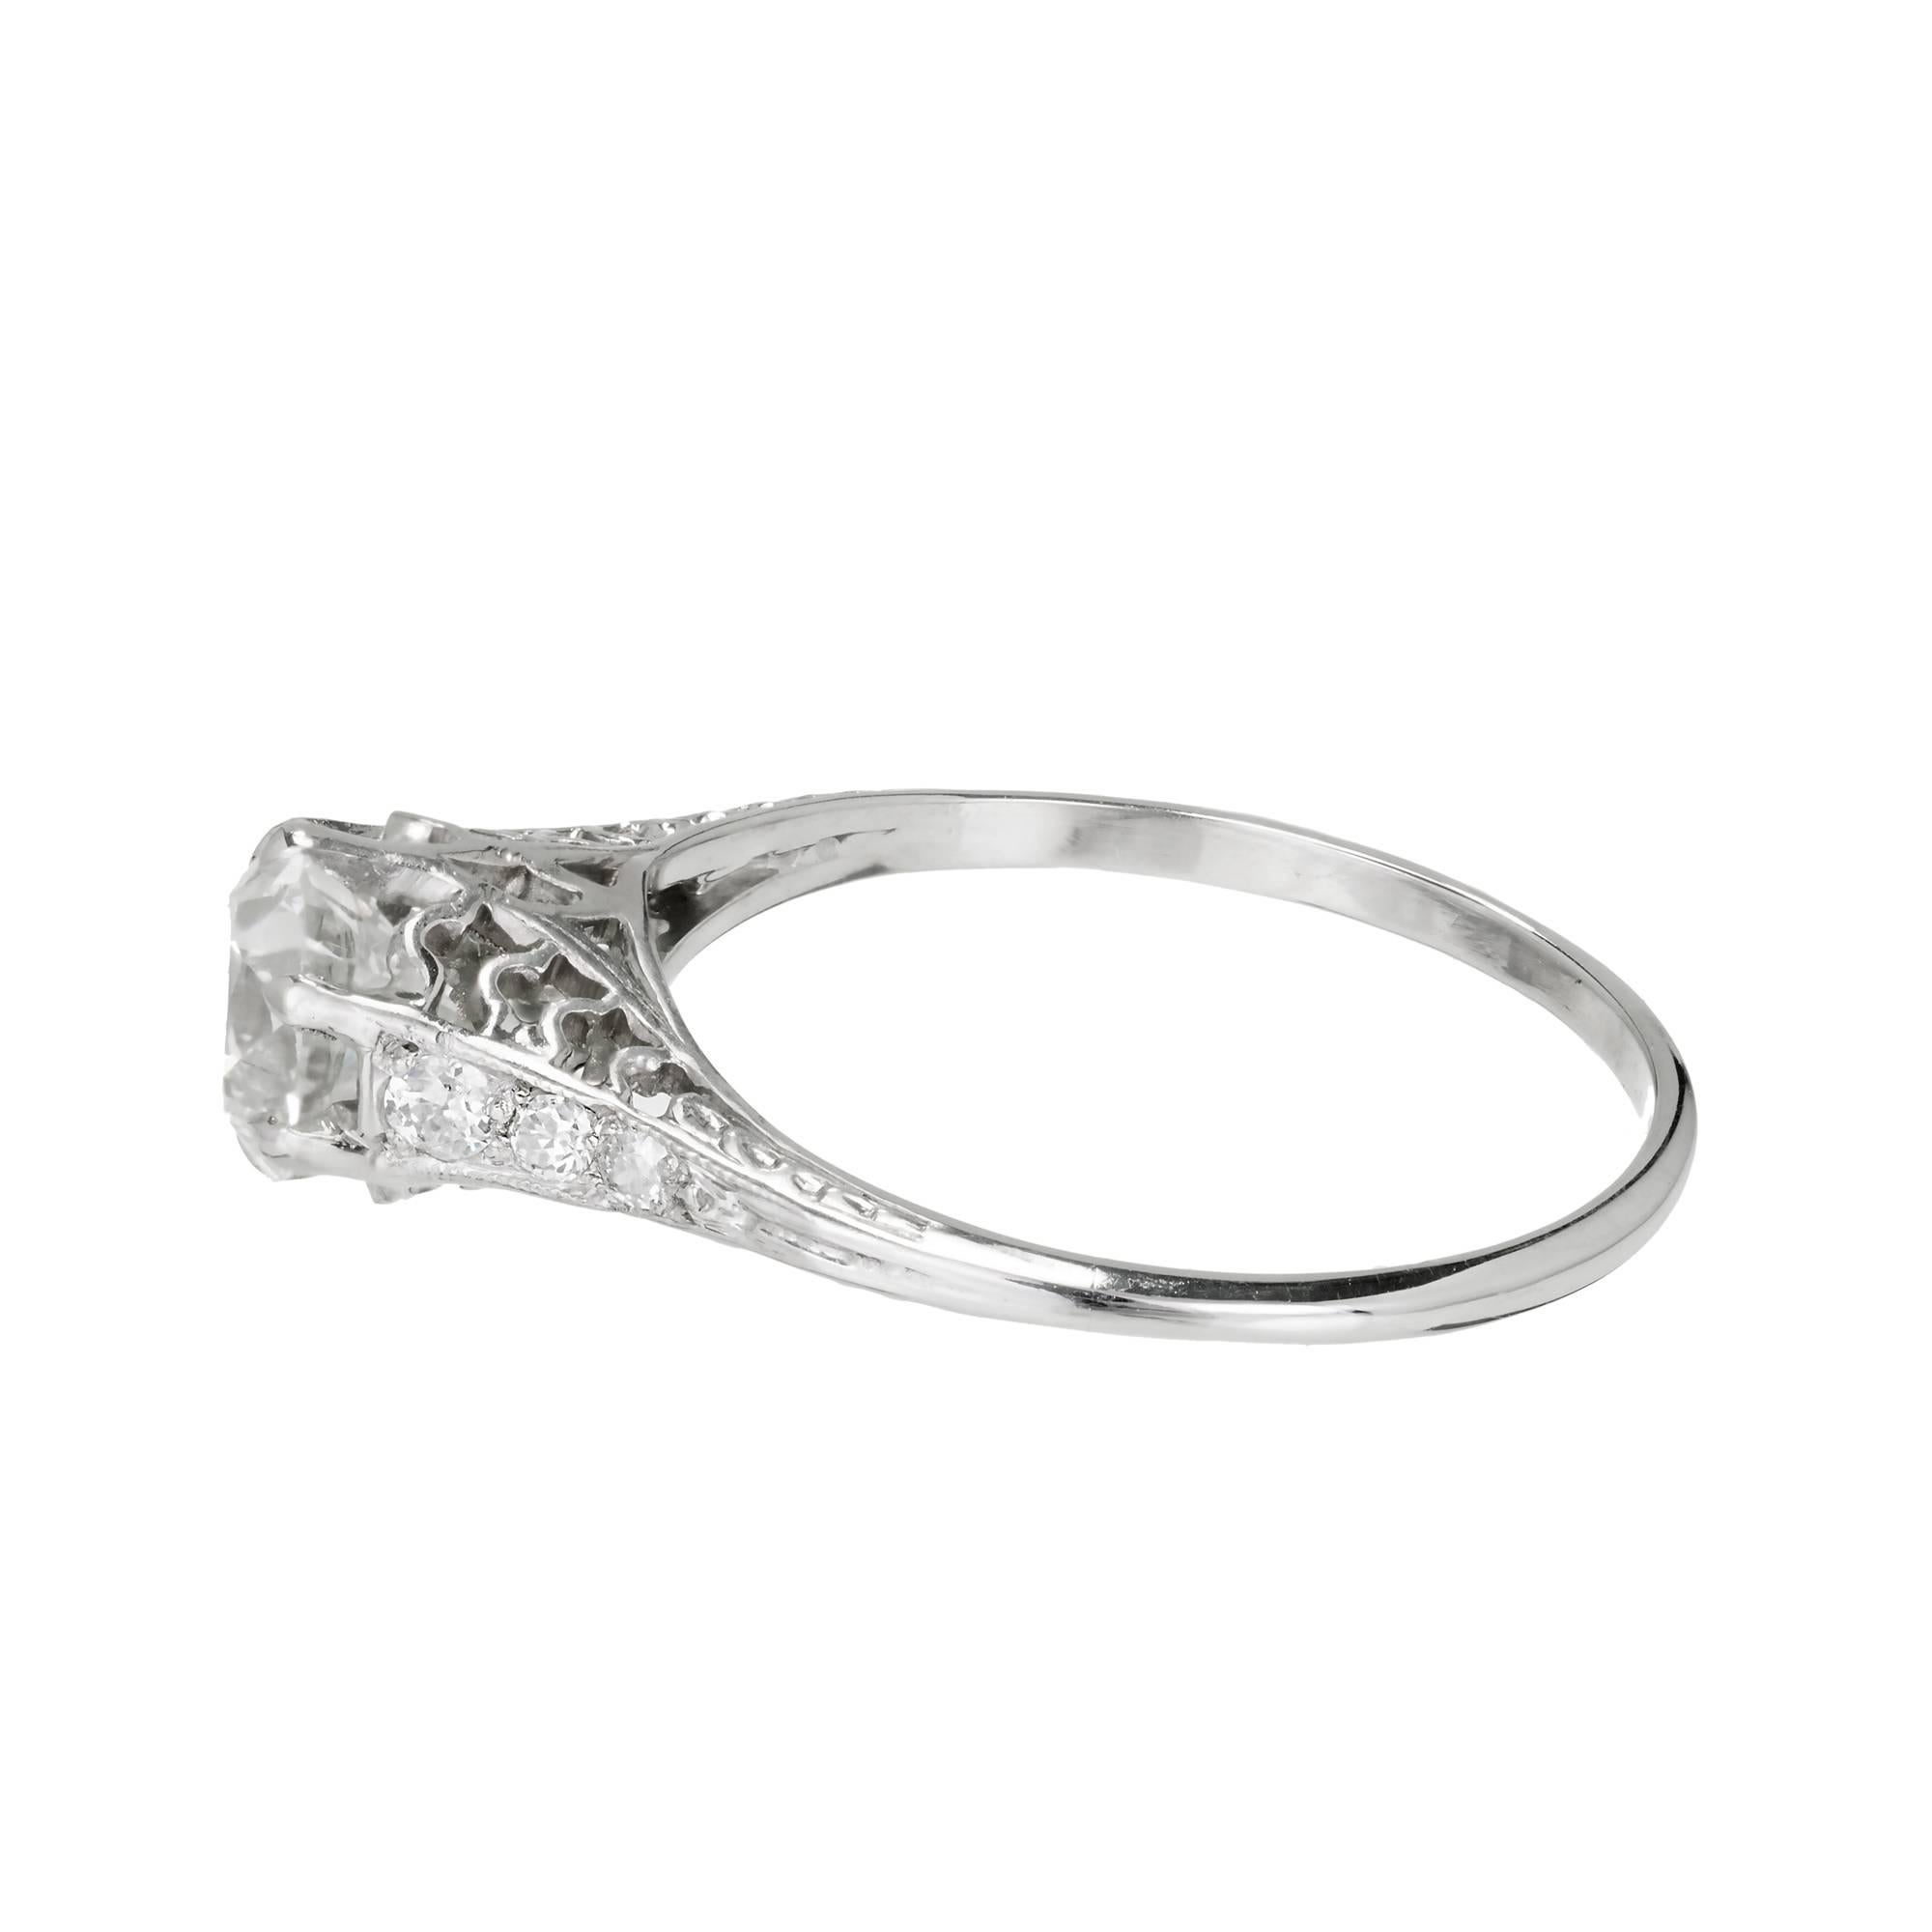 Old European Cut Egl Certified 1.04 Carat Art Deco Filigree Diamond Engagement Platinum Ring